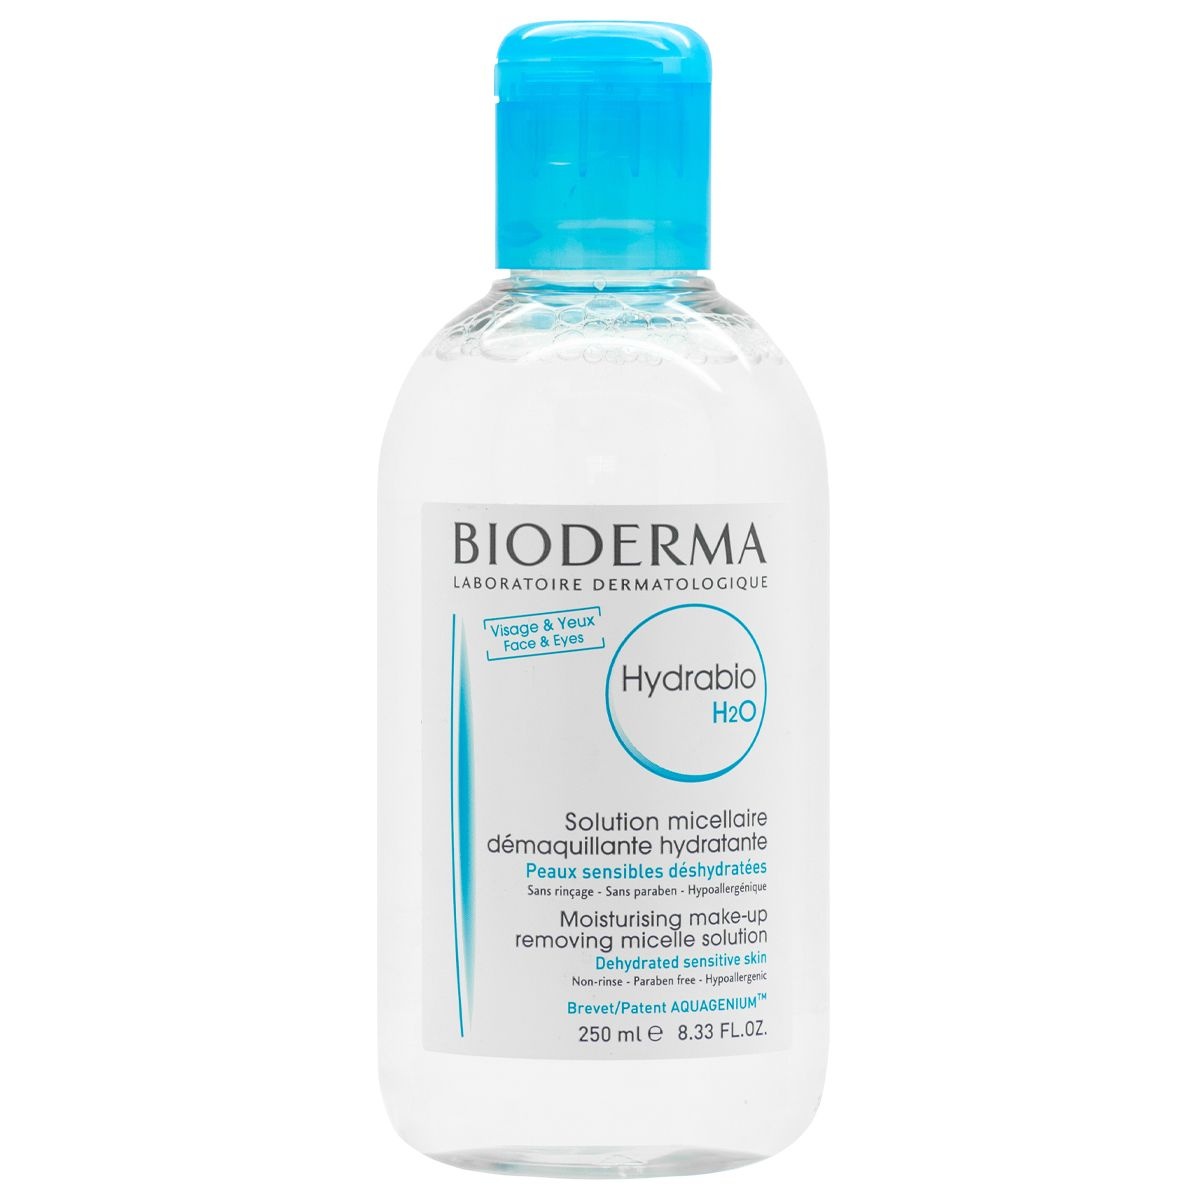 Hydrabio H2O Agua Micelar Desmaquillante para piel deshidratada, 250 ml ( Bioderma) - Farmacia Dermatológica Beauty Derm